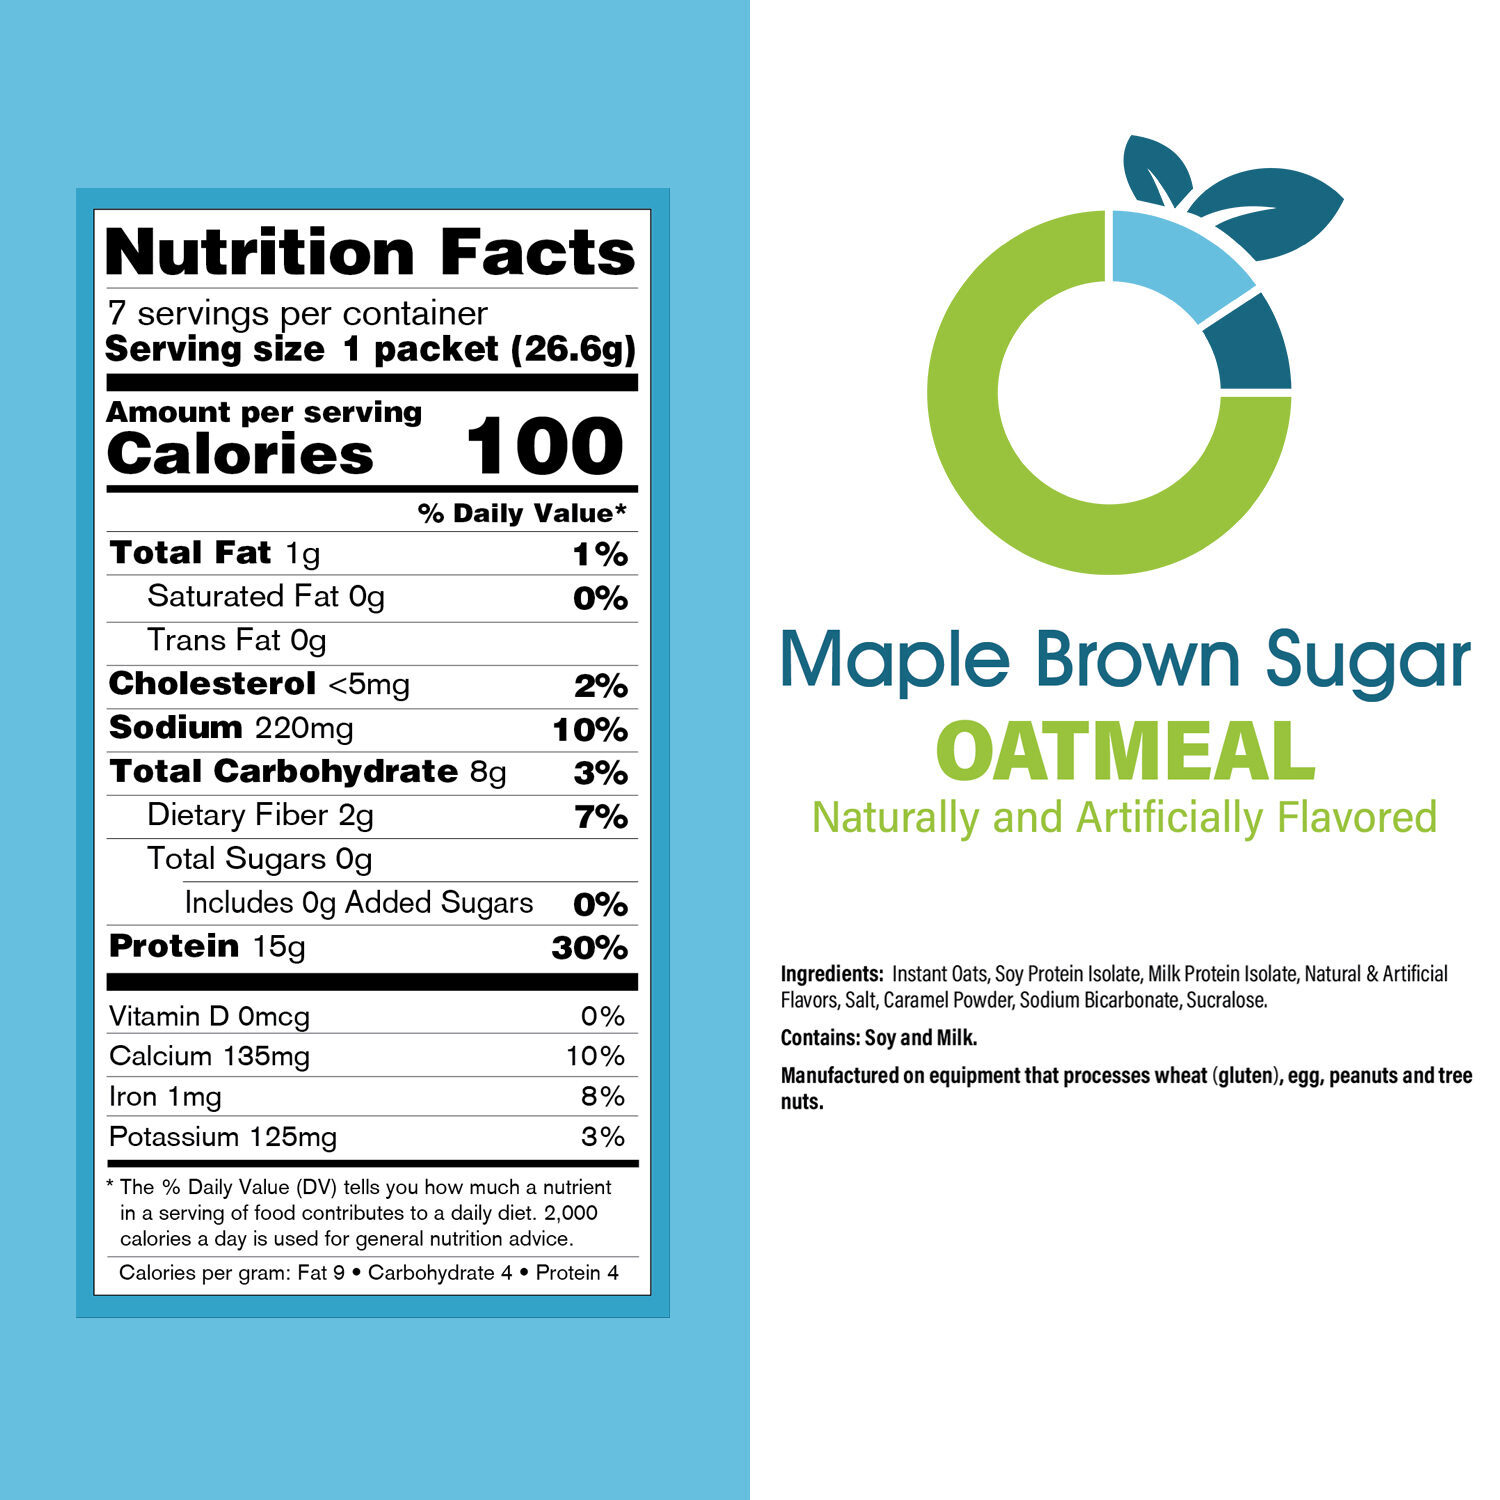 Maple-Brown-Sugar-Oatmeal-Panel_05dc05dc0_78739